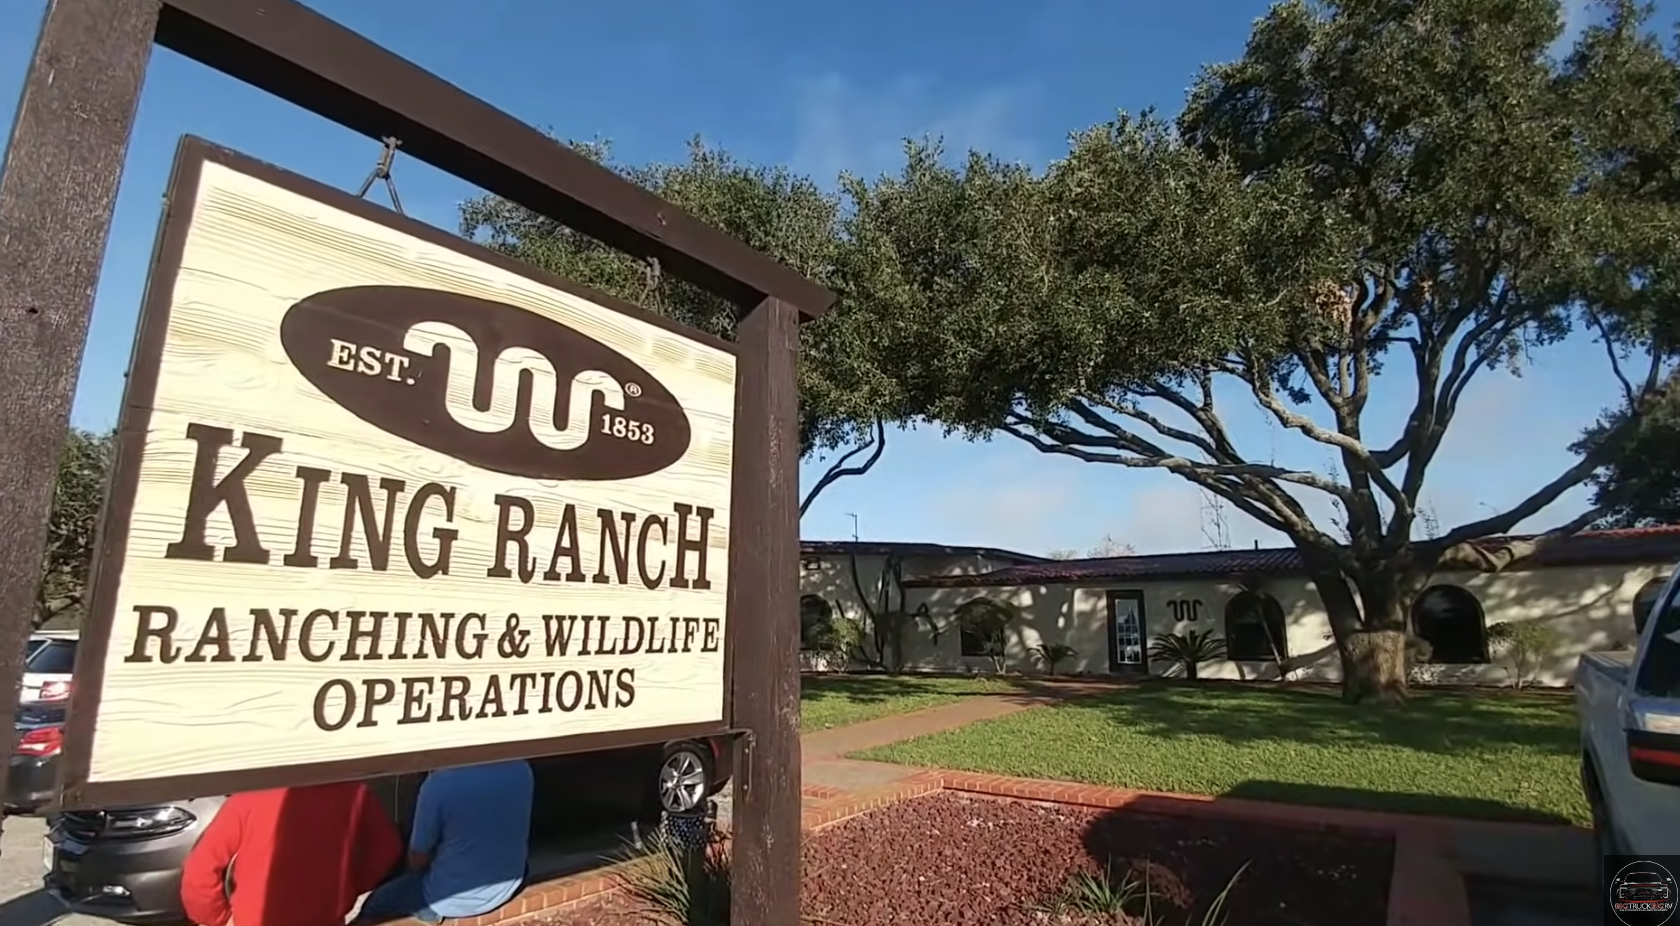 King Ranch sign